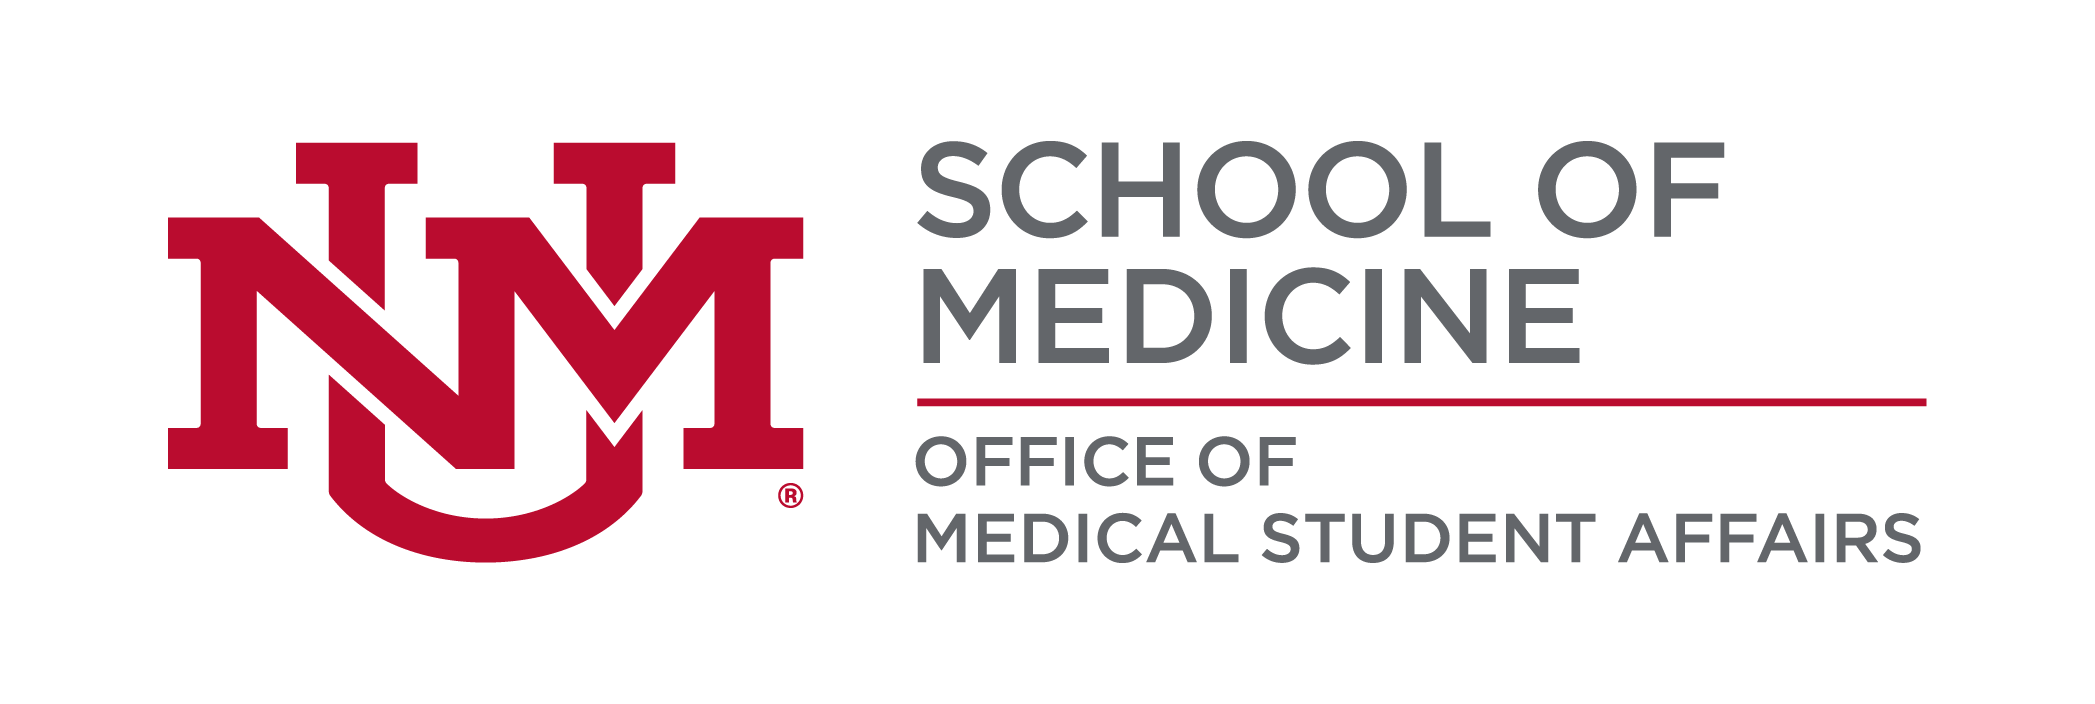 UNM School of Medicine - Office of Medical Student Affairs Logo.